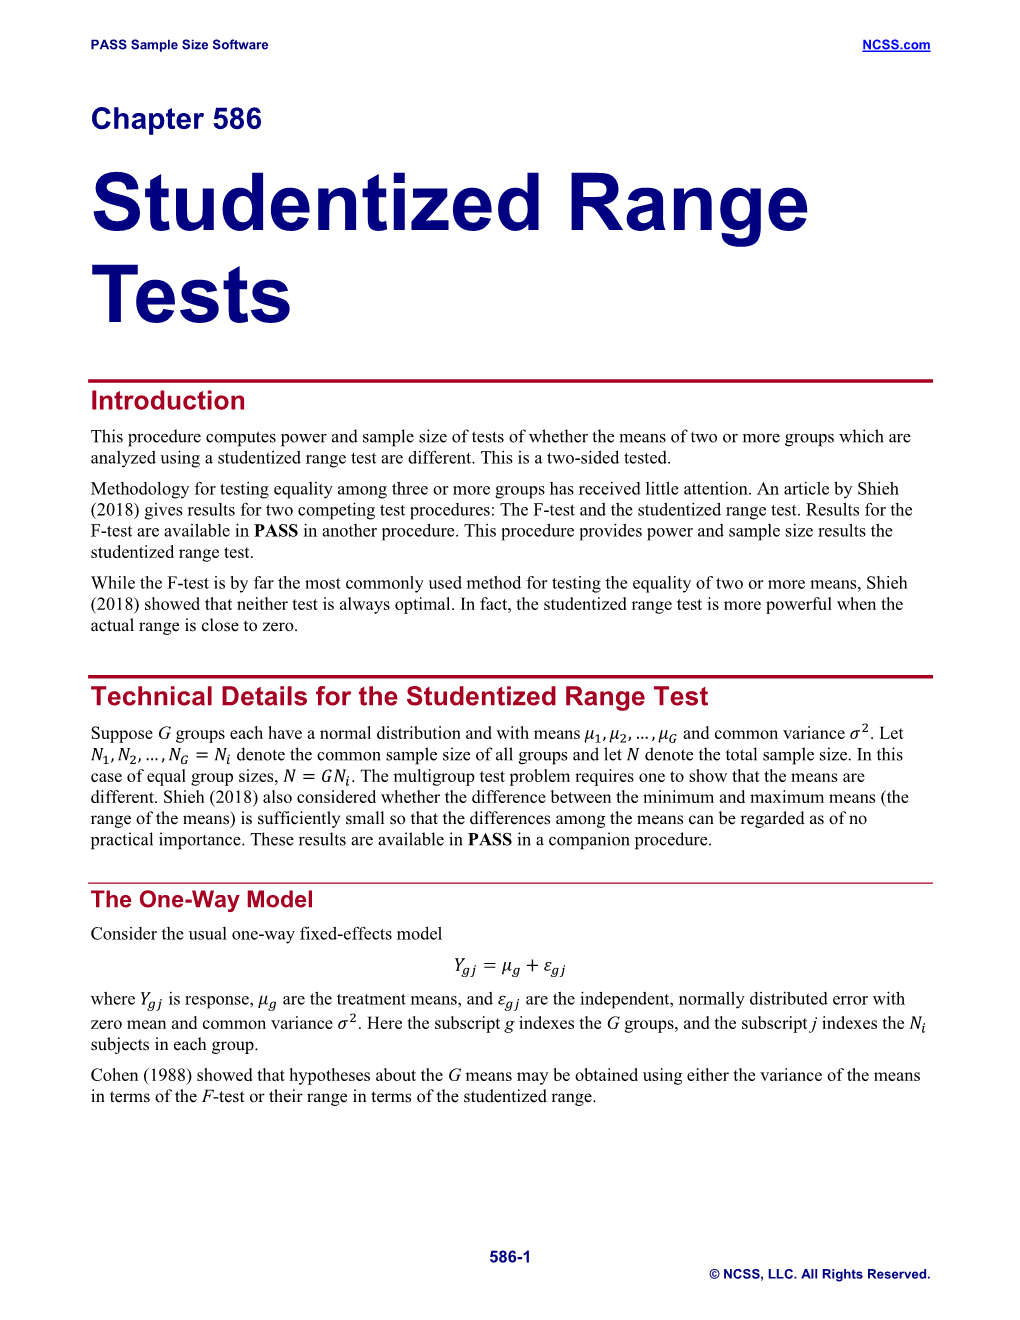 Studentized Range Tests